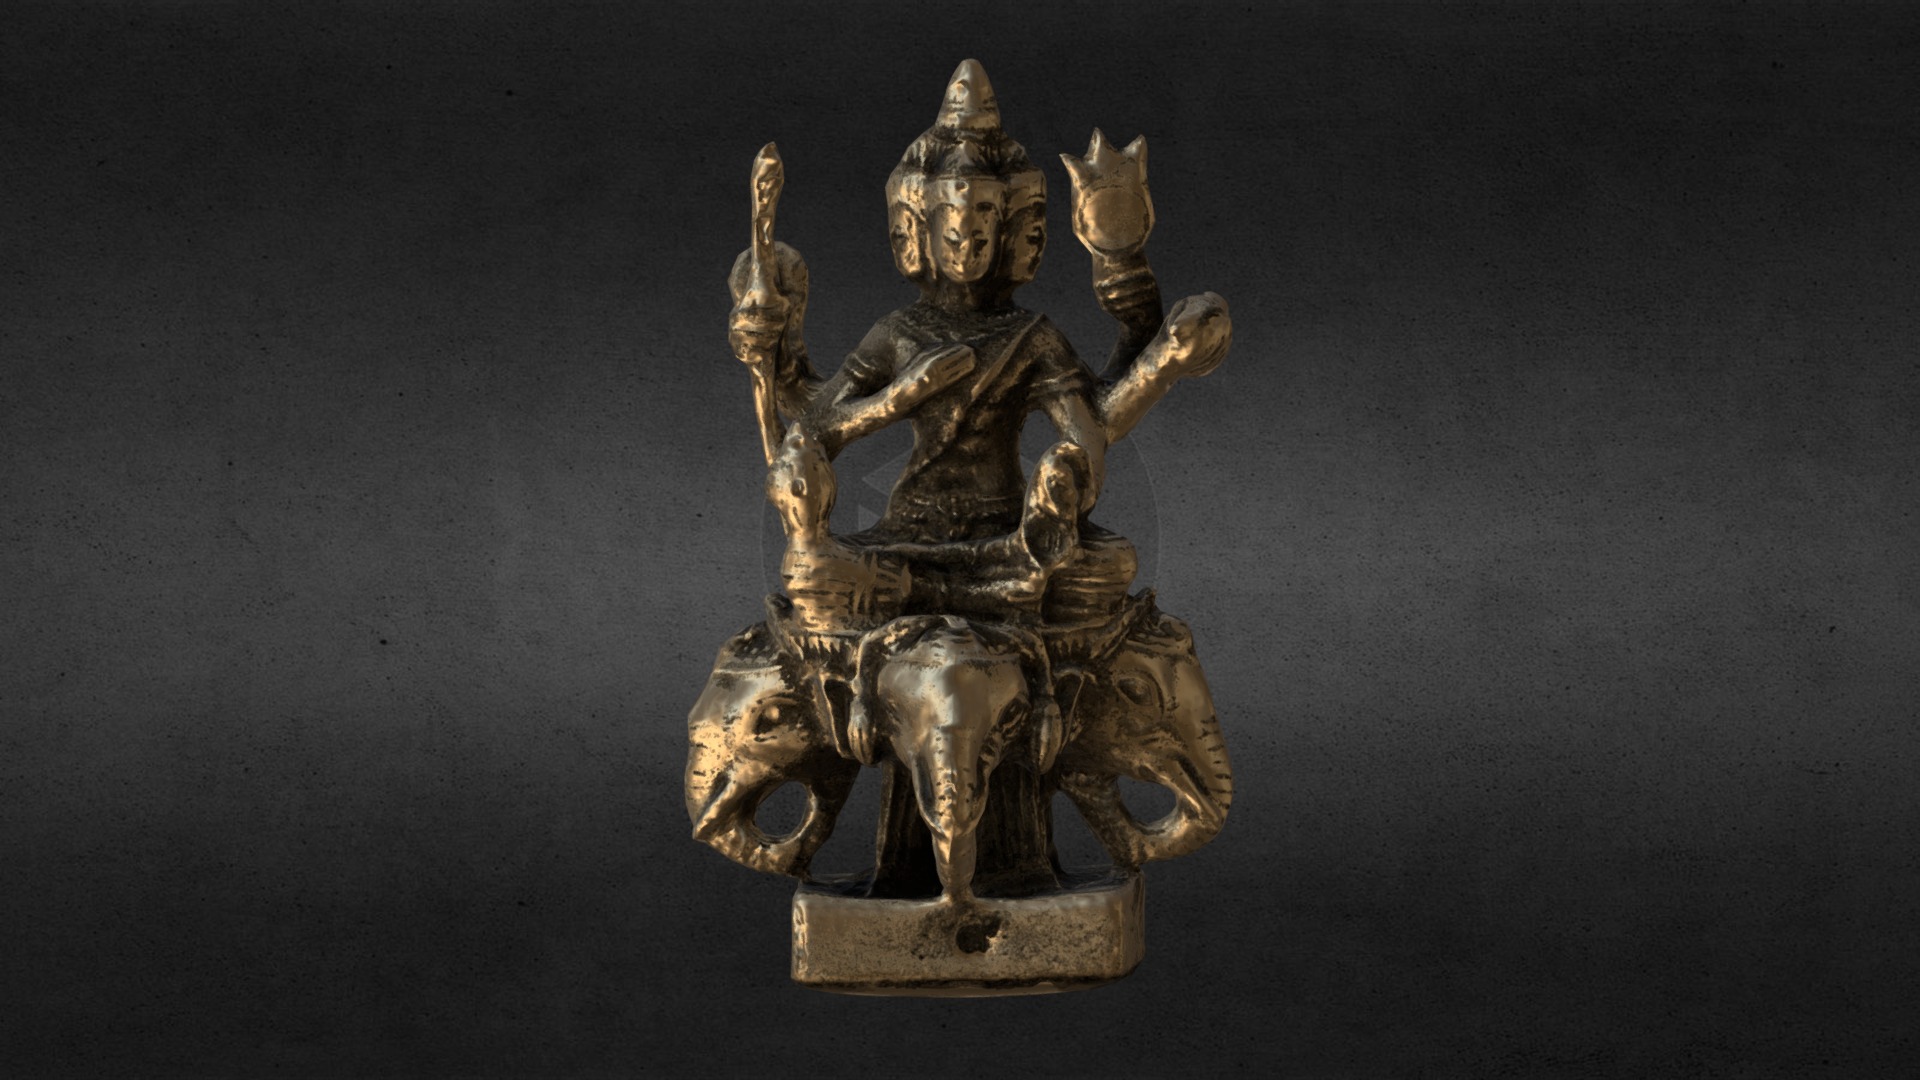 3D model Brahma photogrammetry – materials remake - This is a 3D model of the Brahma photogrammetry - materials remake. The 3D model is about a statue of a person holding a staff.